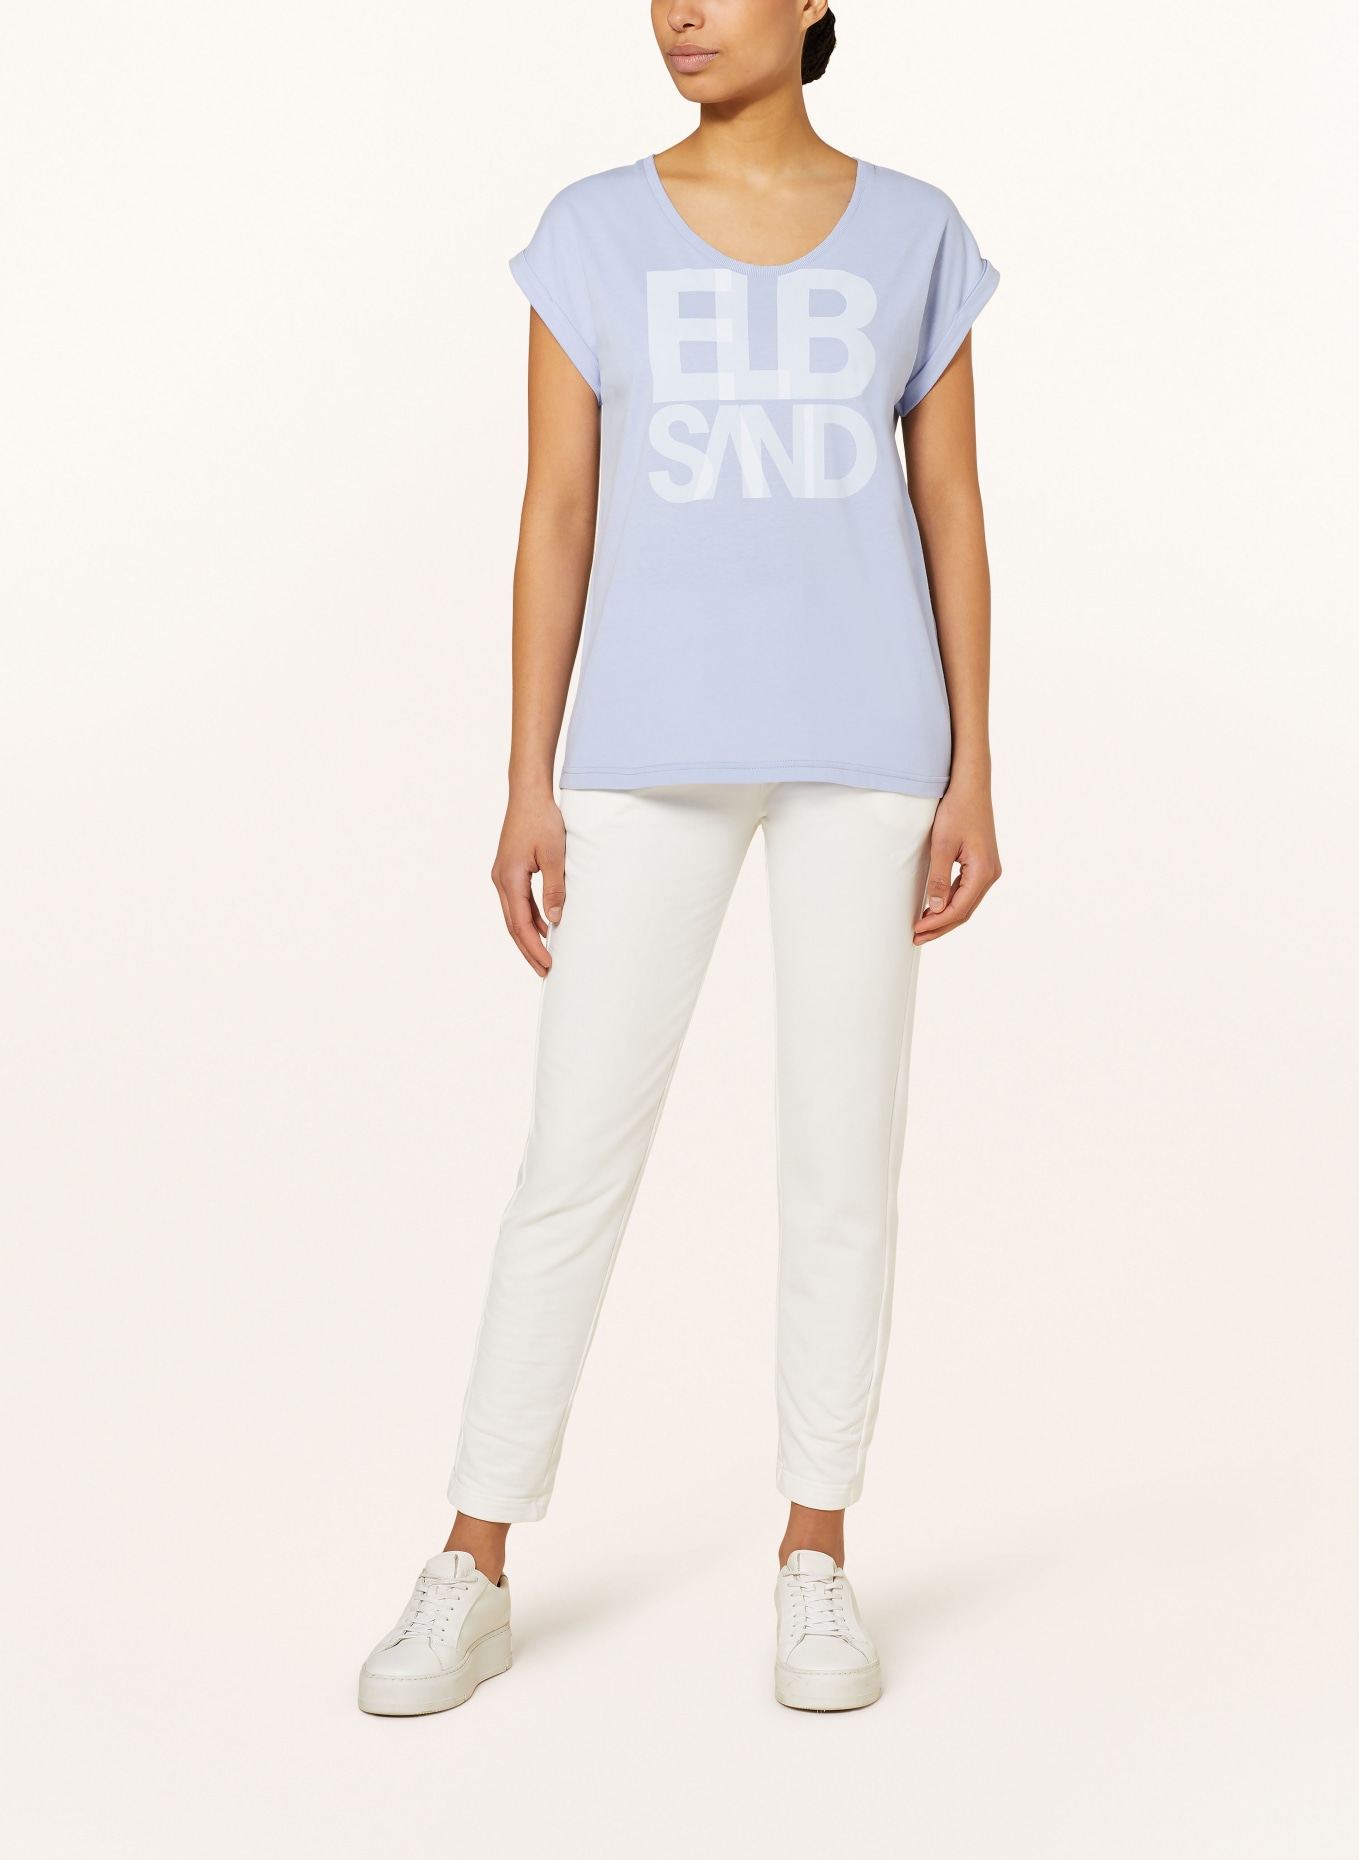 ELBSAND T-shirt ELDIS, Color: LIGHT BLUE (Image 2)